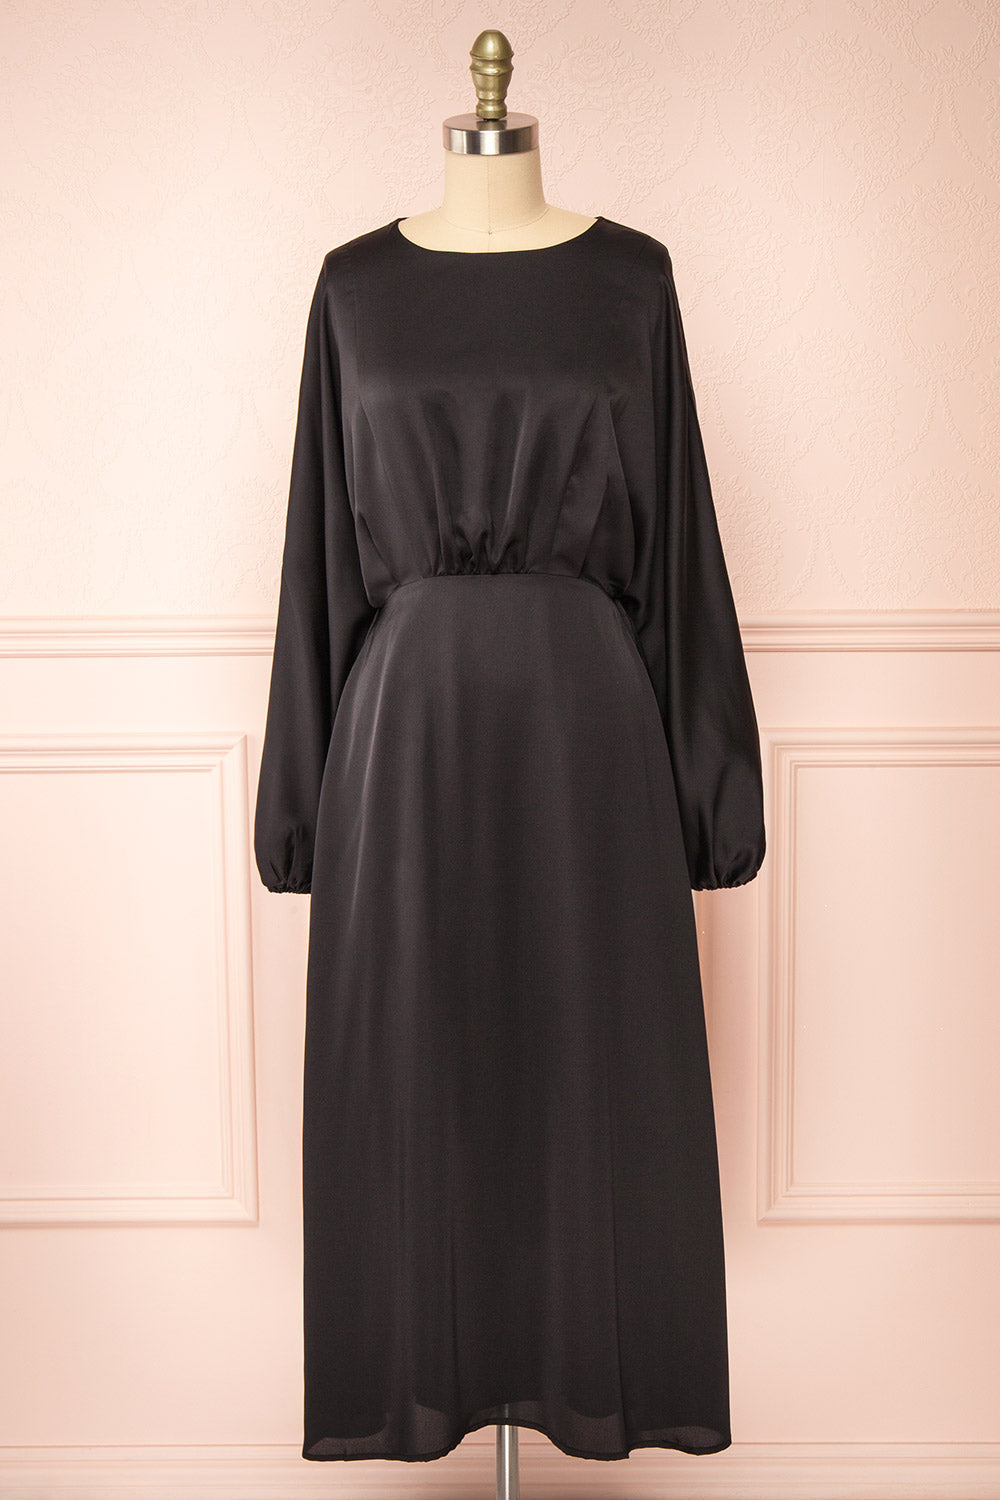 Reneane Black Long Sleeve Midi A-Line Dress | Boutique 1861 front view